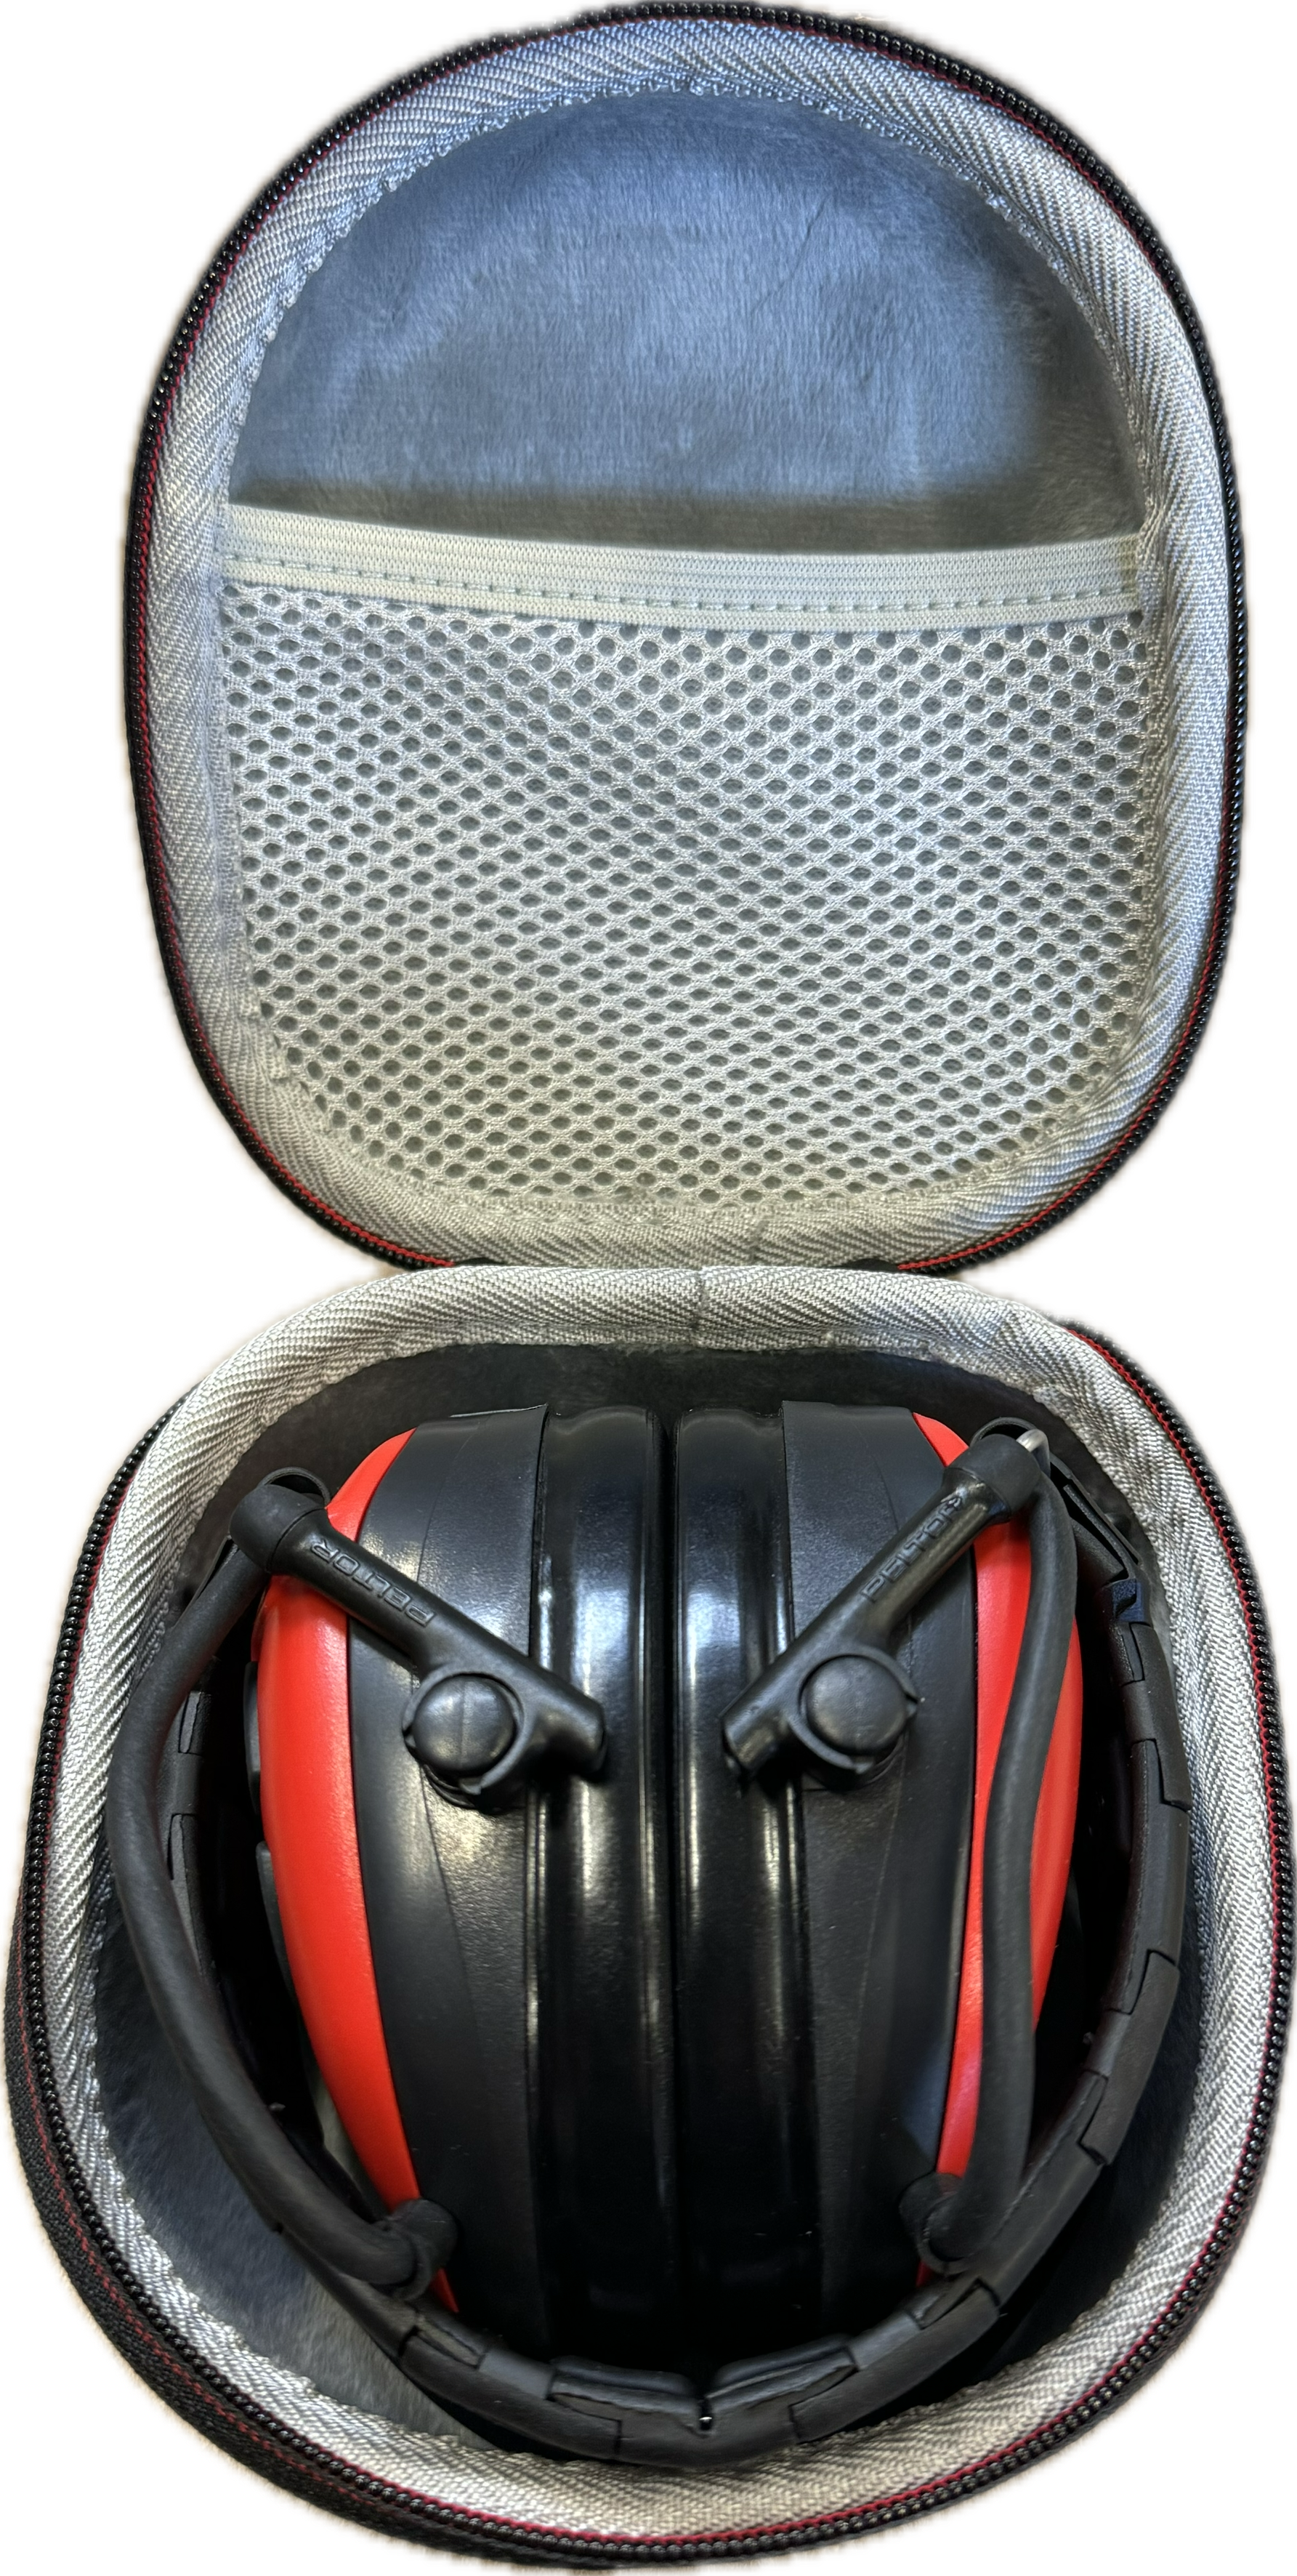 SKS storage box for hearing protection 3M PELTOR SportTac l 3M Bulls Eye I with foldable headband